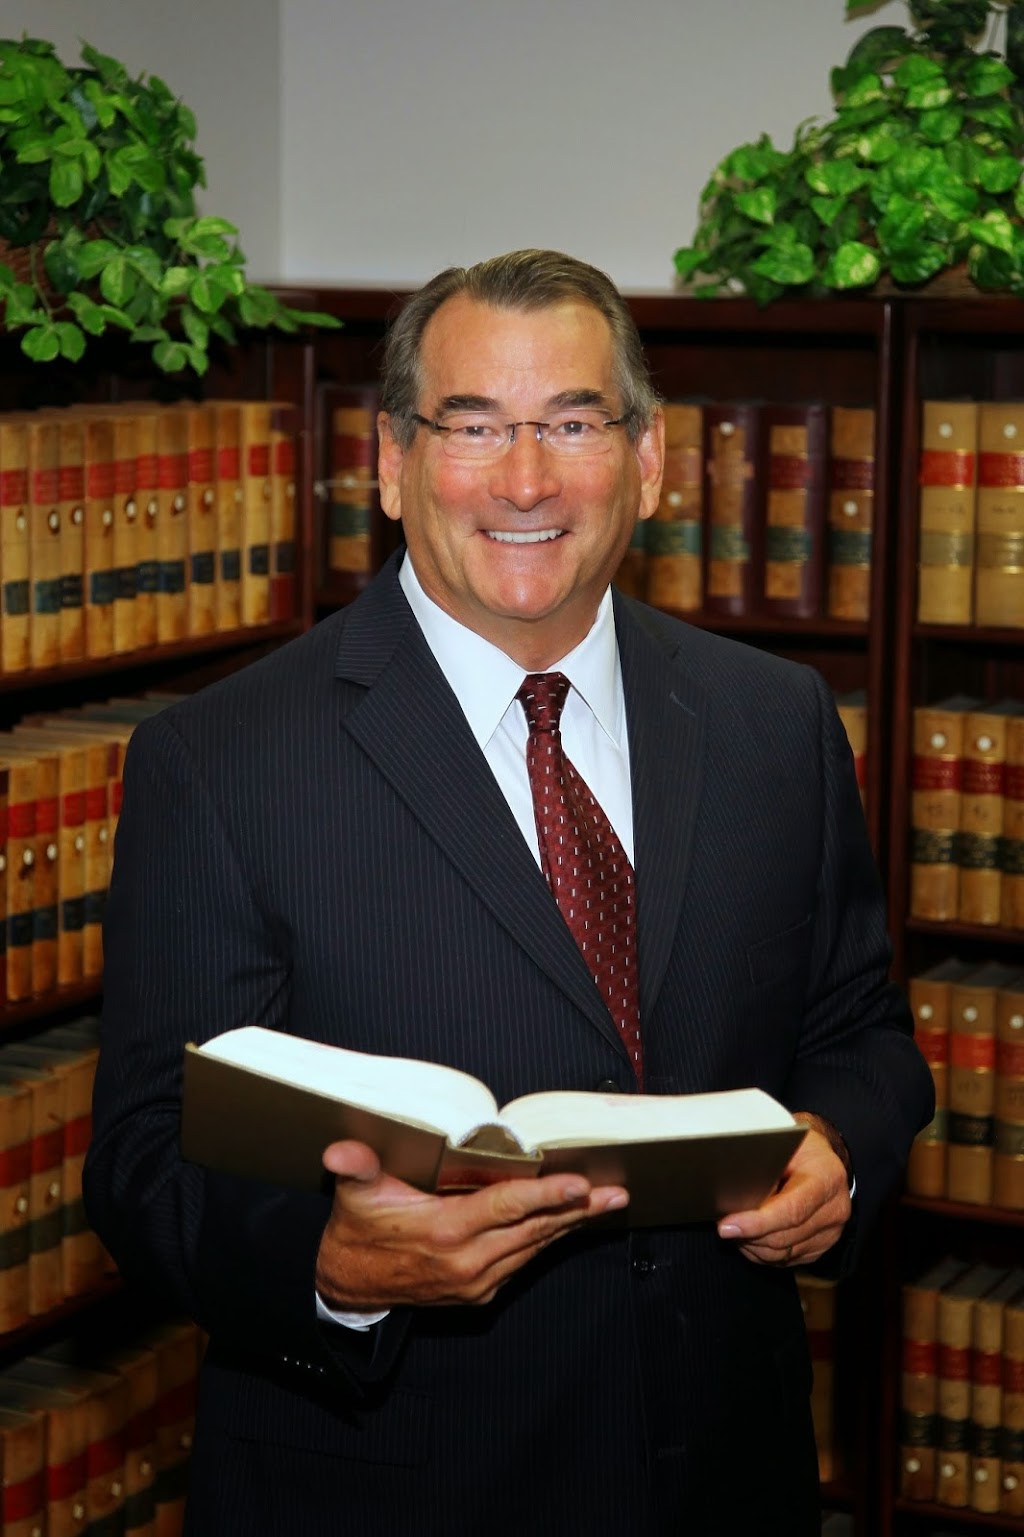 Robert C. Herman, Attorney at Law | 24 Canyon Dr, Carson City, NV 89703, USA | Phone: (775) 230-6695